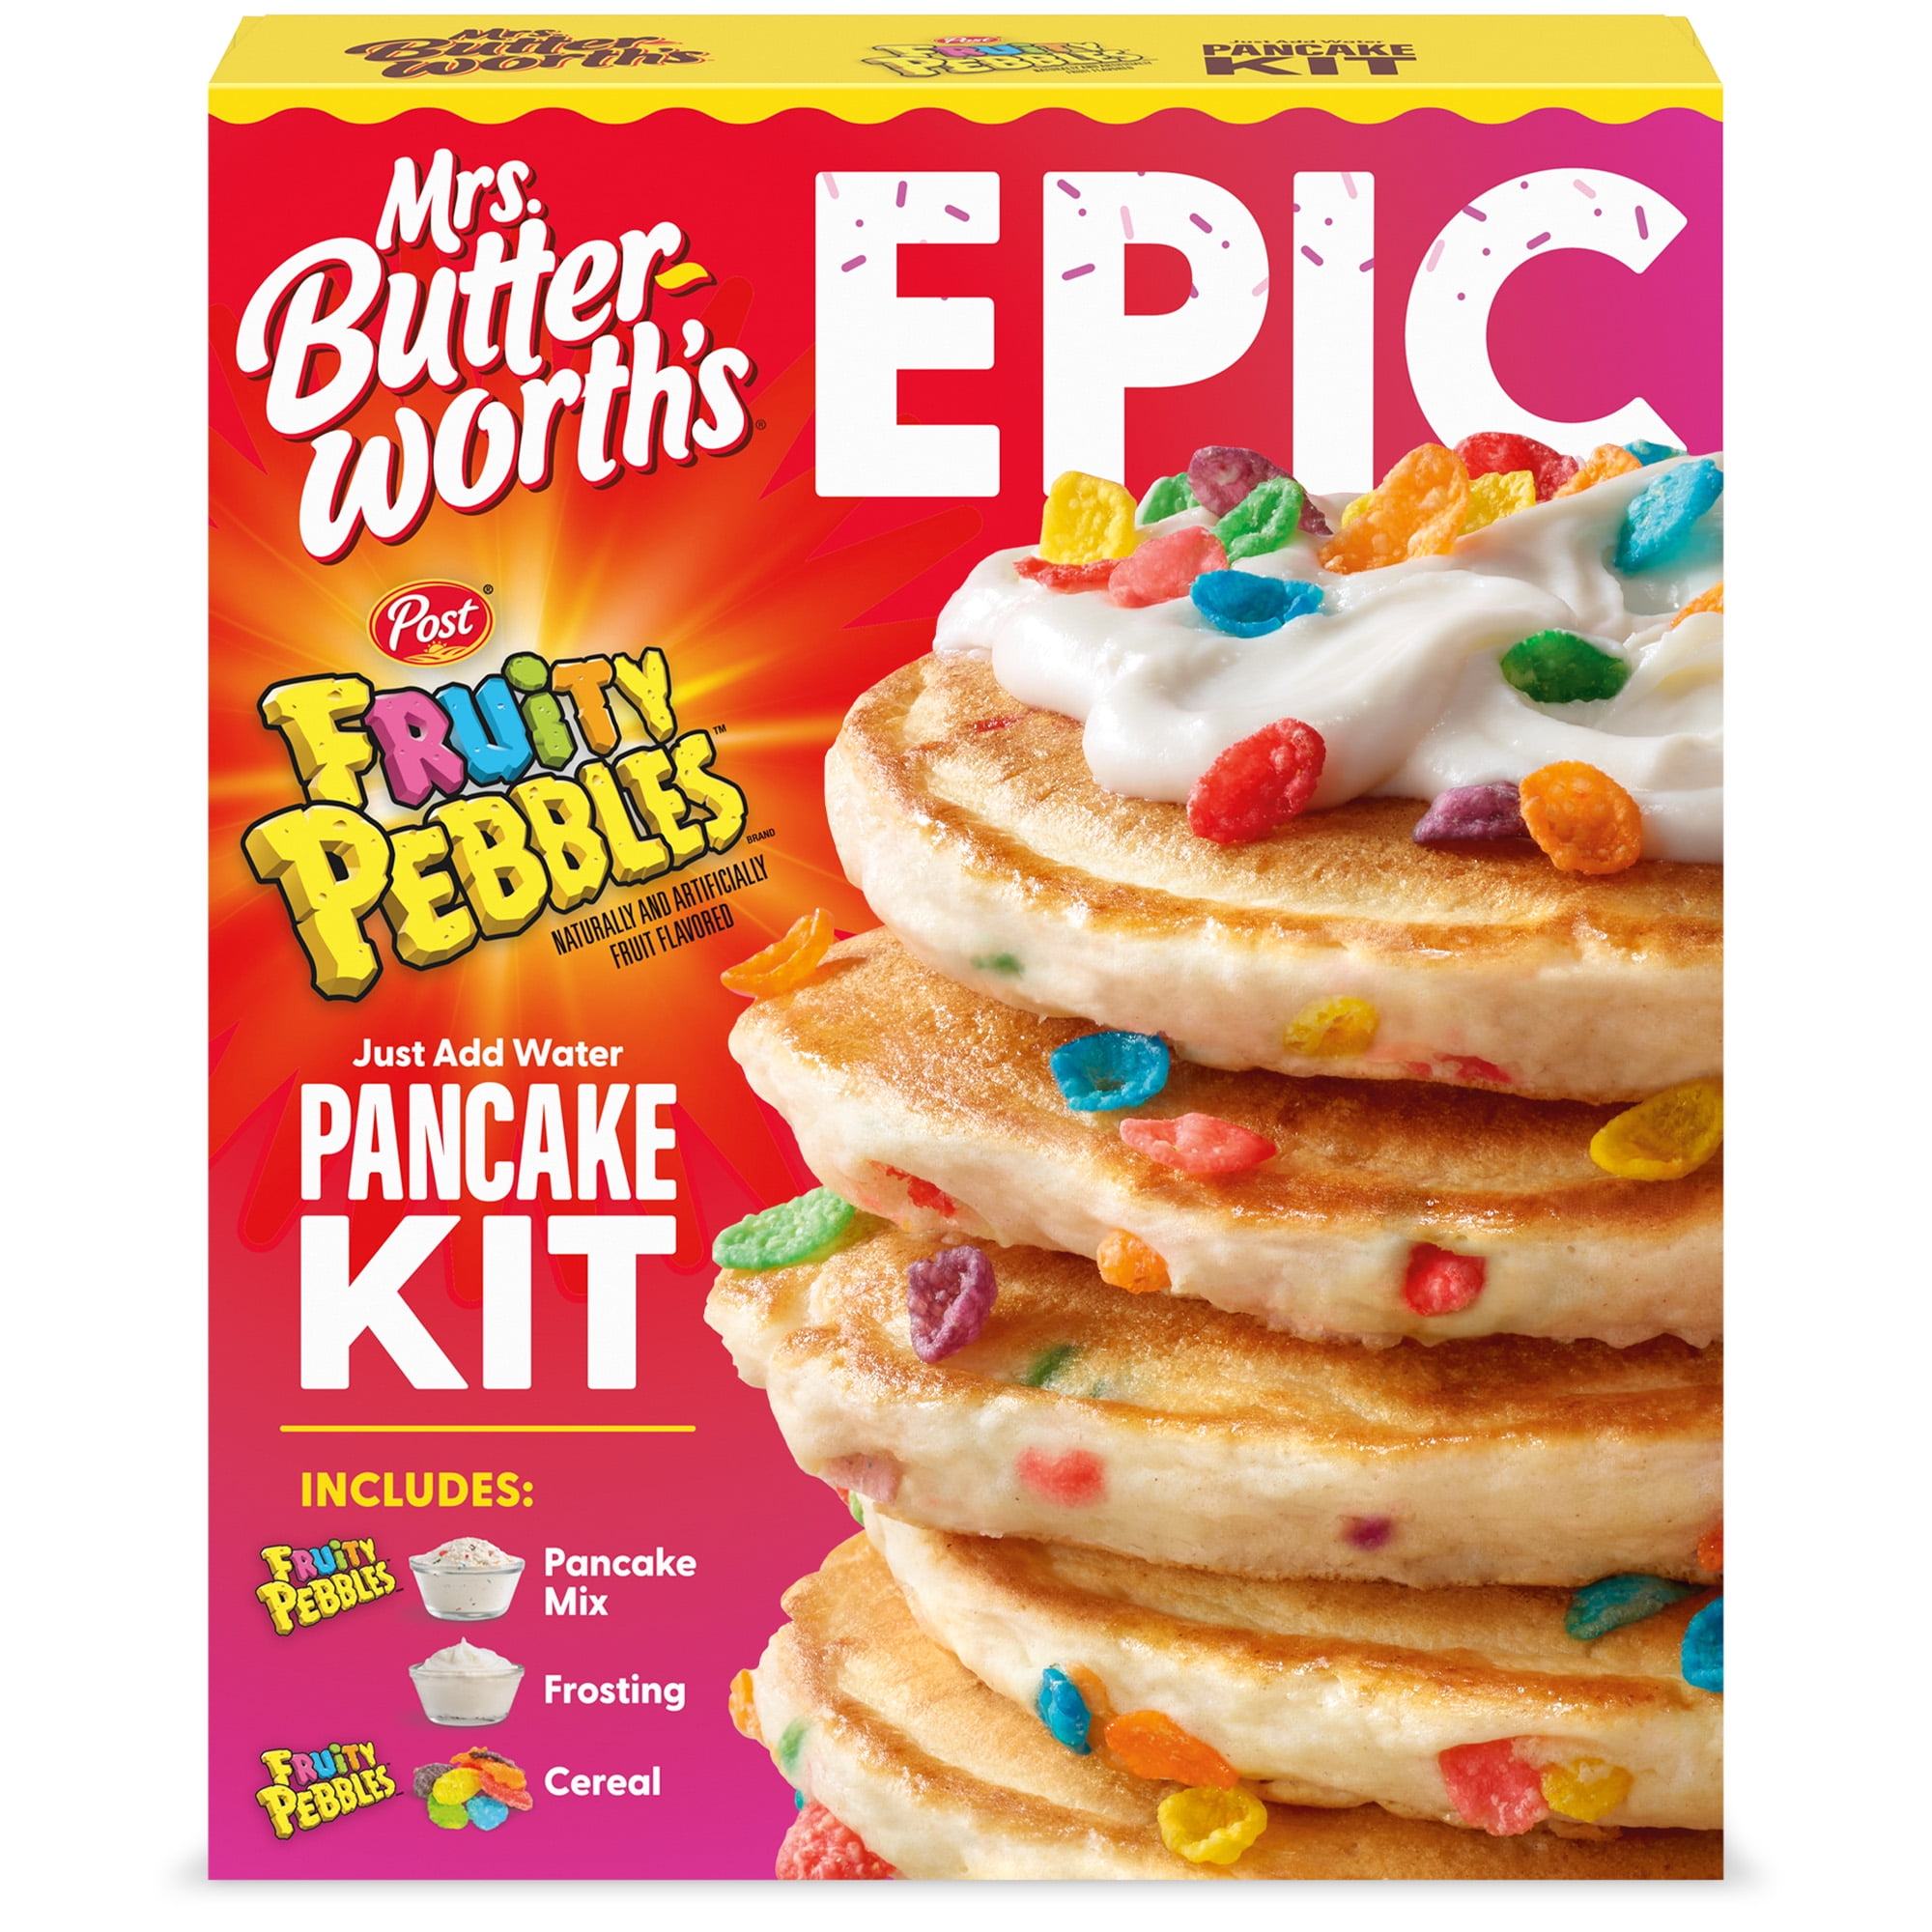 Mrs. Butterworth's Mrs Butterworths Epic Fruity Pebble Pancake Mix, 16 oz Box